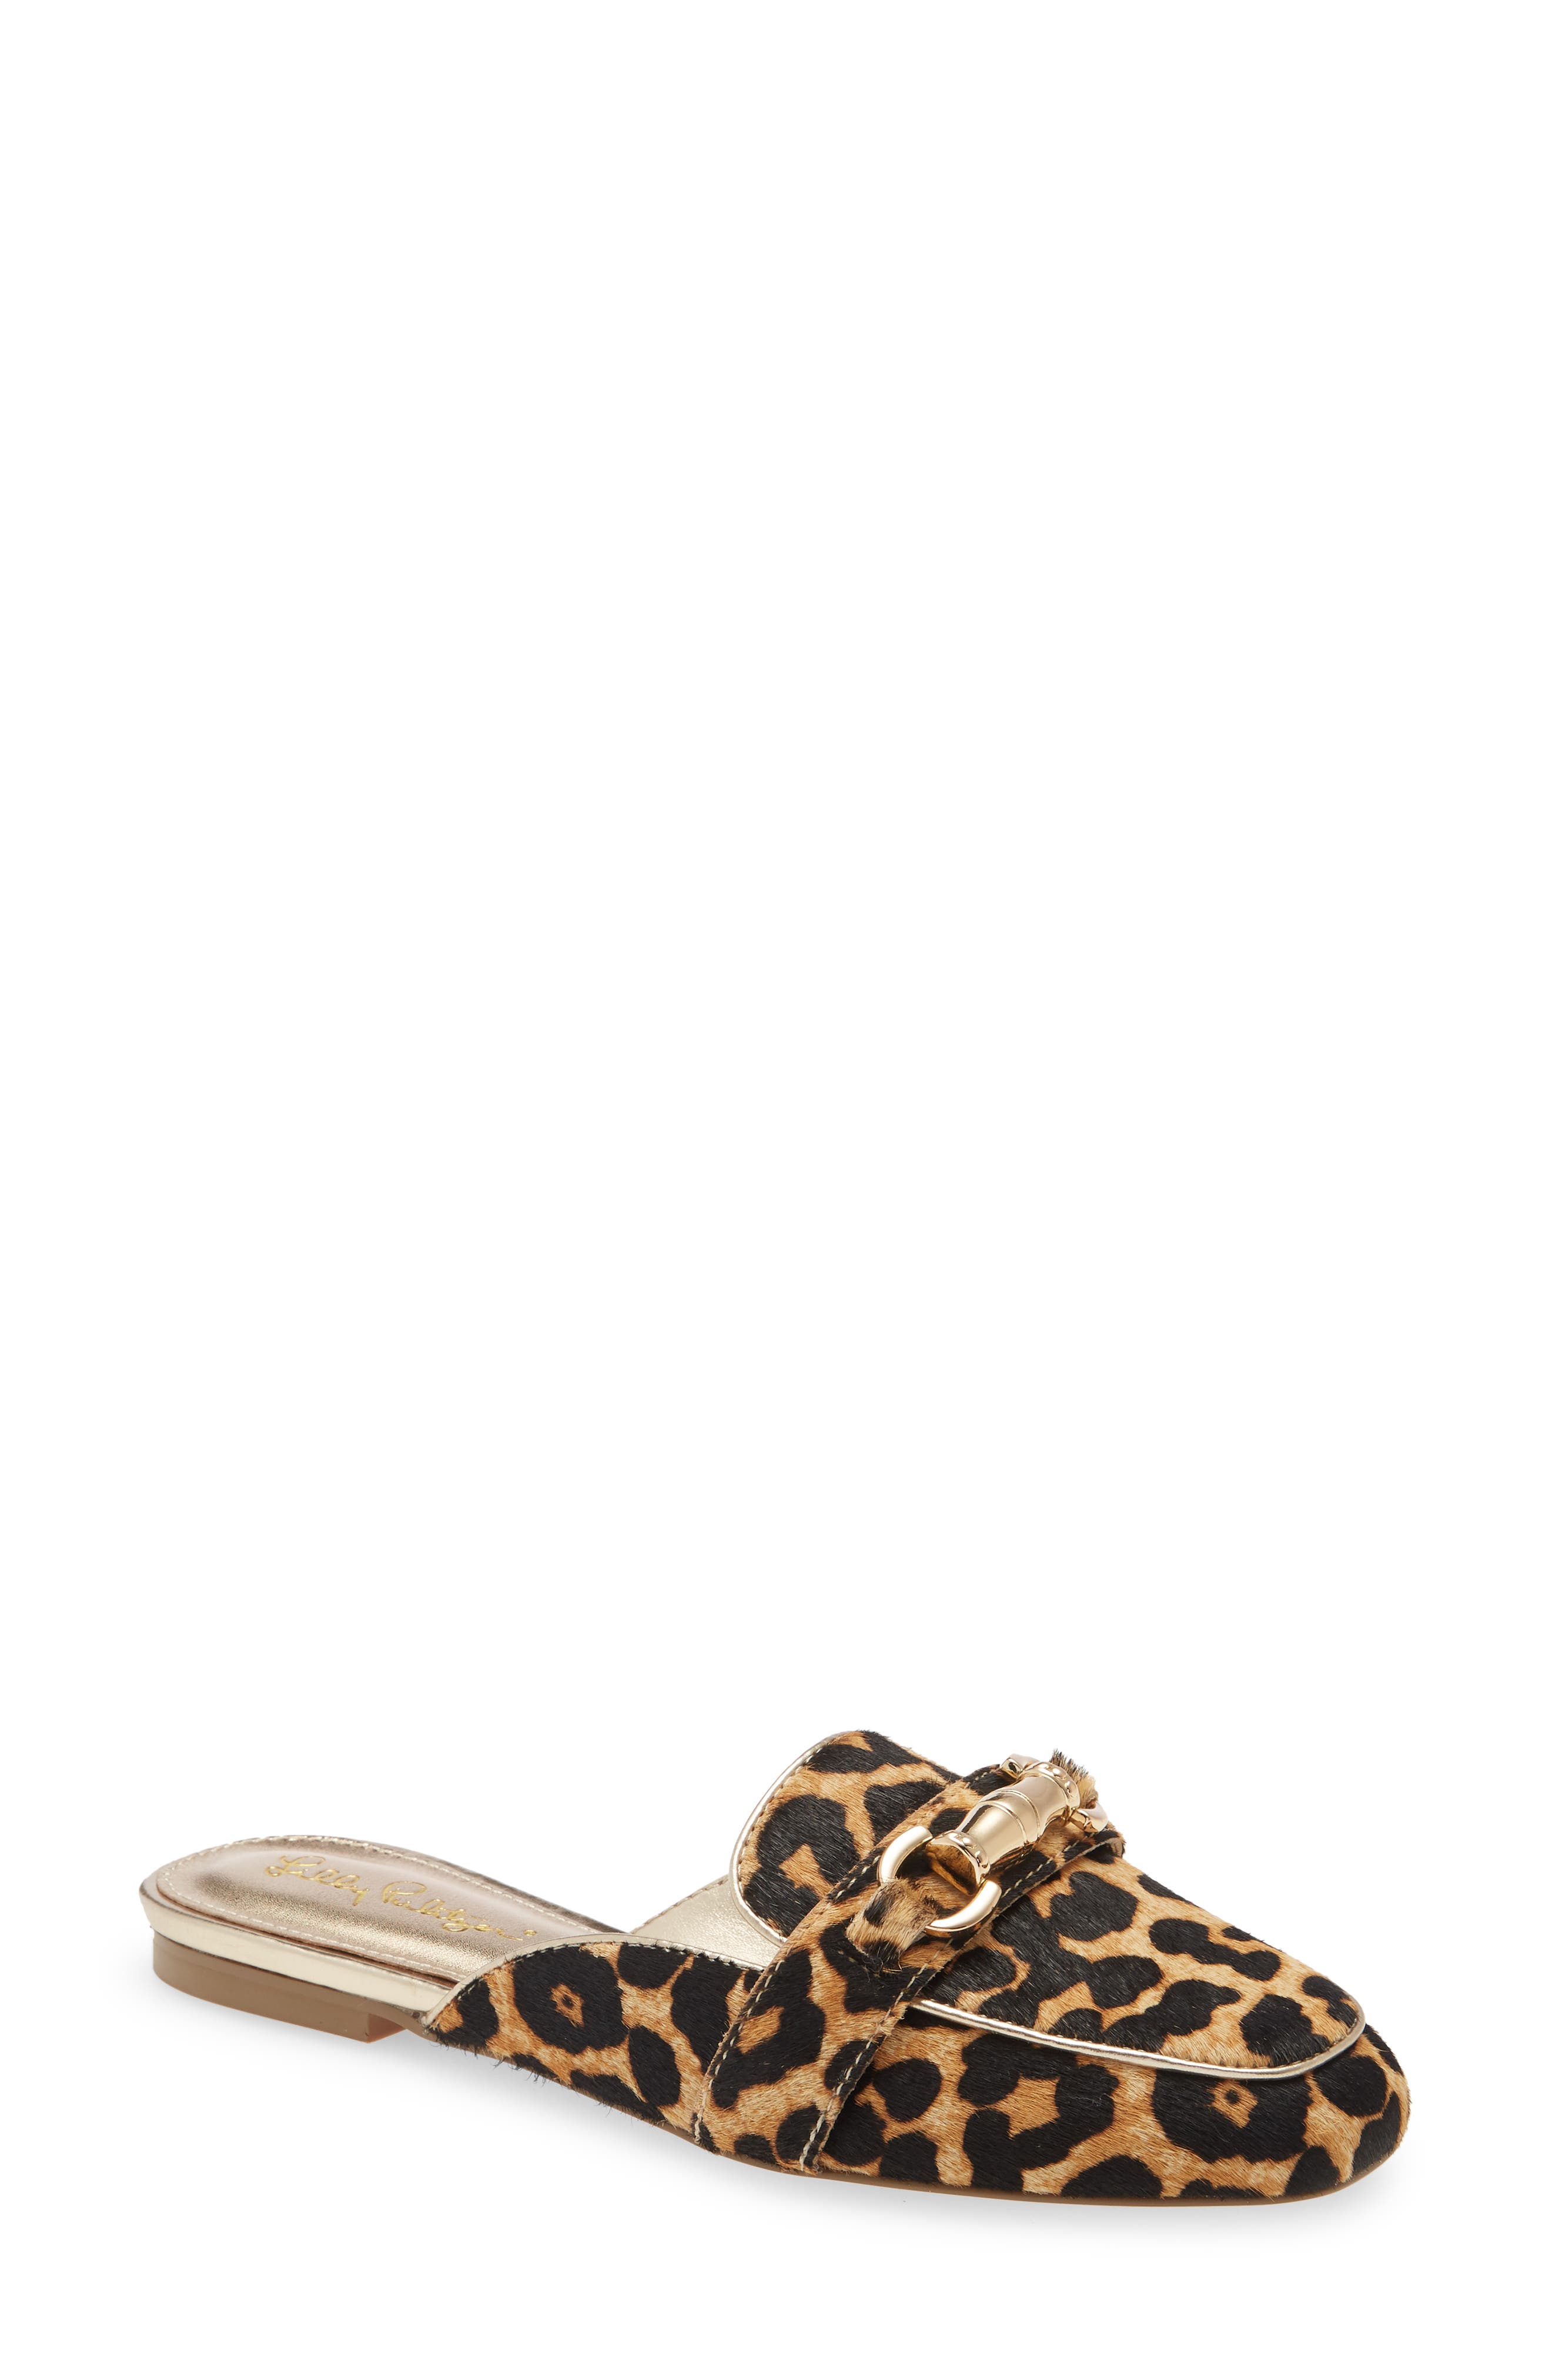 Mules Animal \u0026 Leopard Print Shoes 